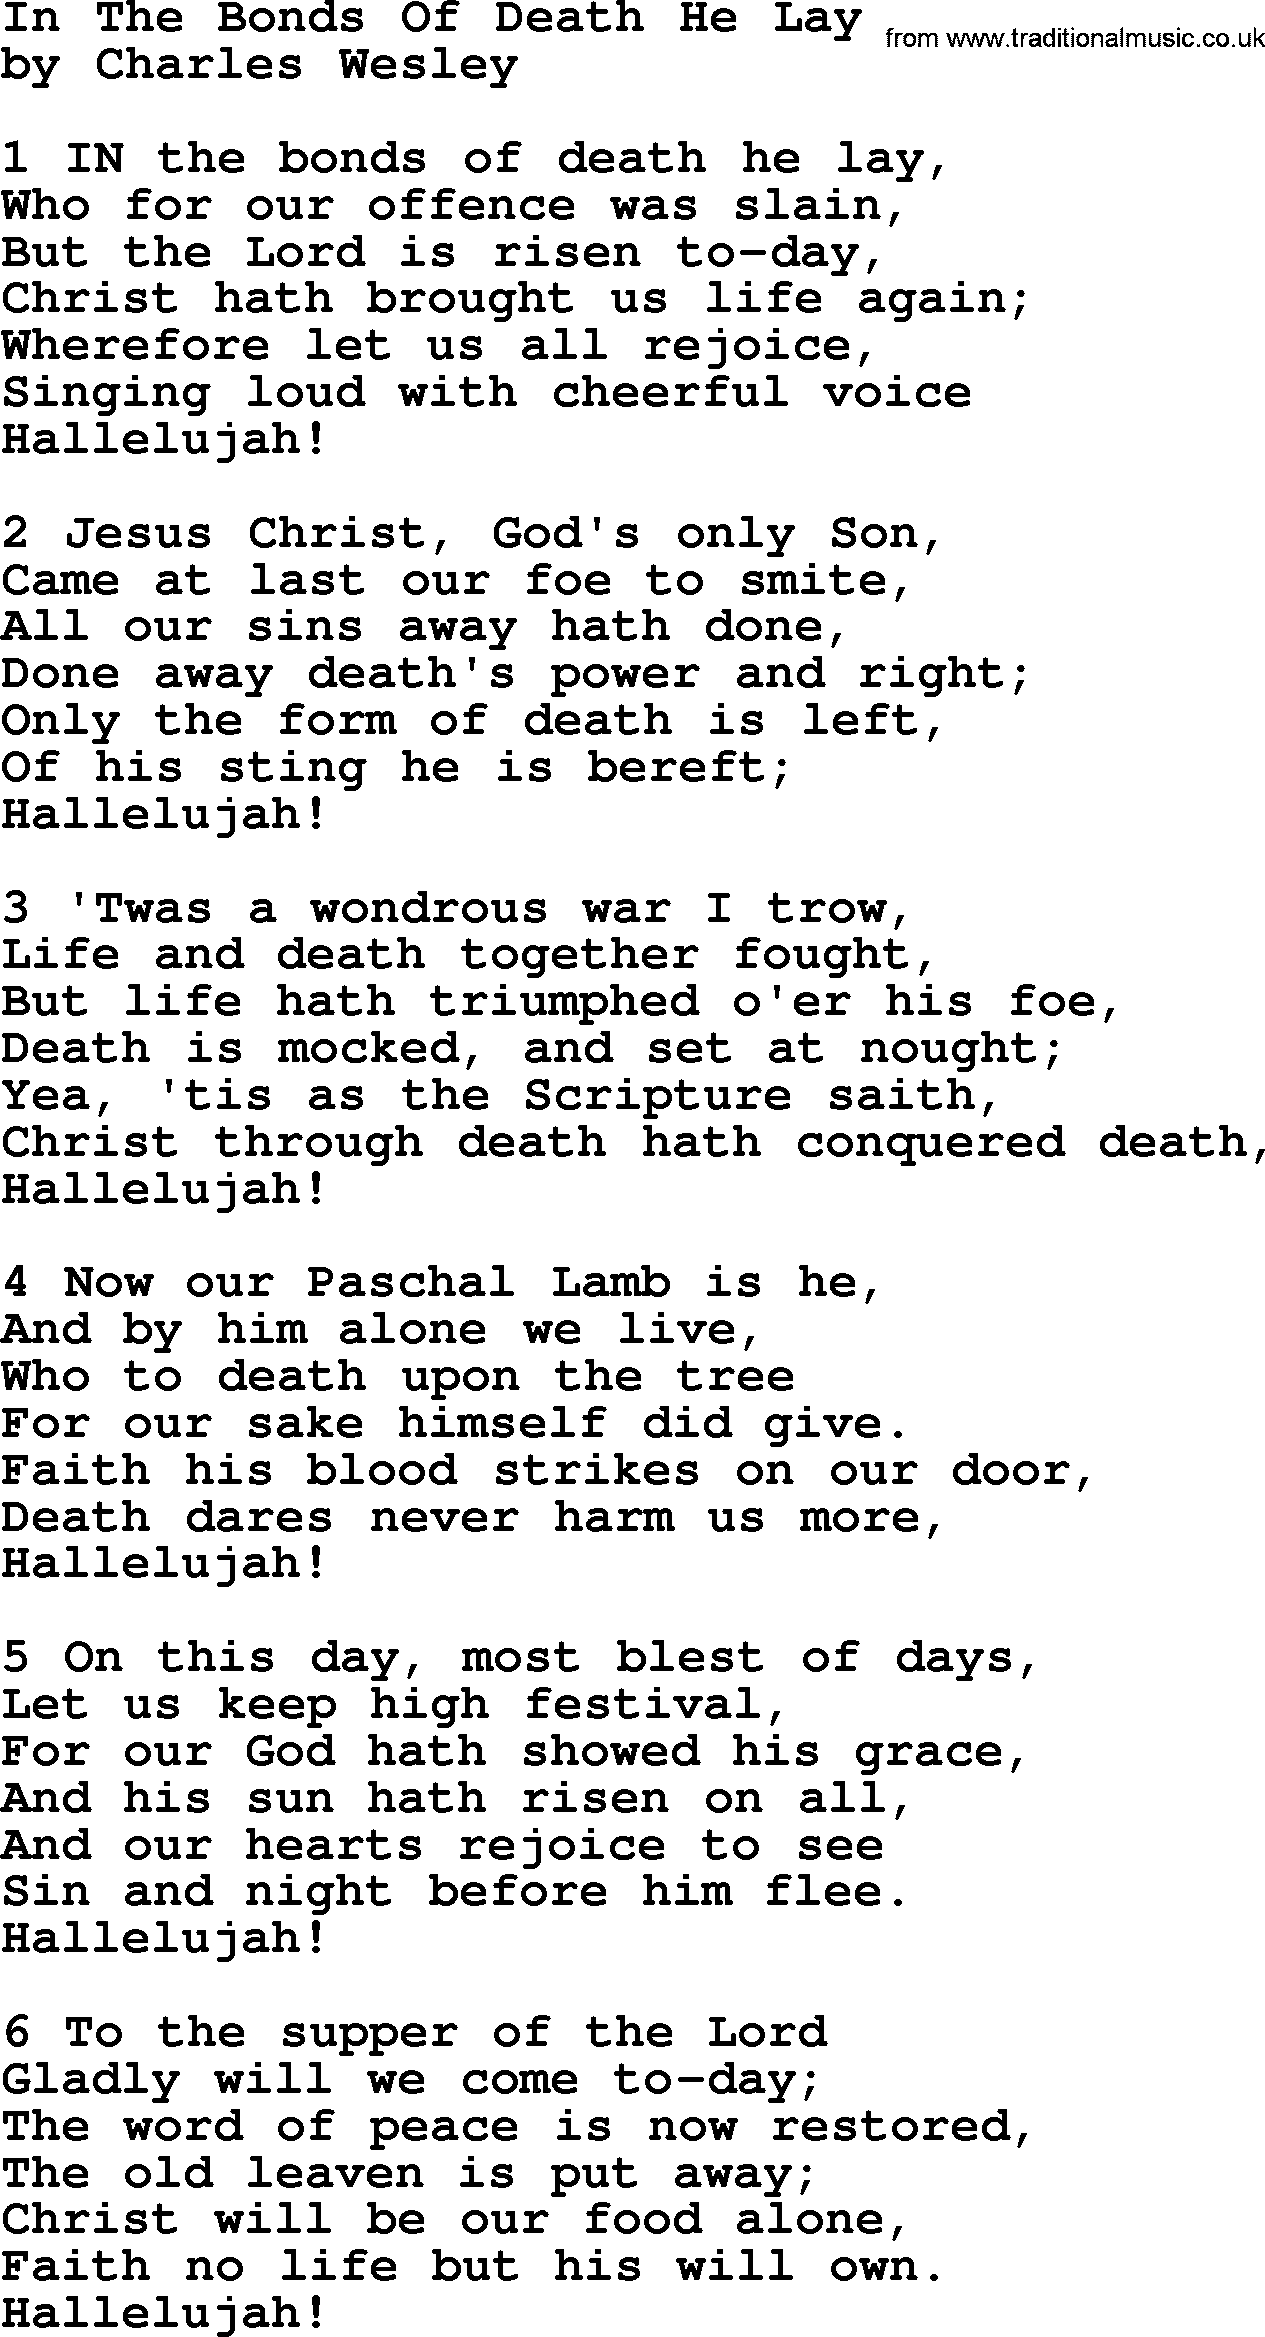 Charles Wesley hymn: In The Bonds Of Death He Lay, lyrics